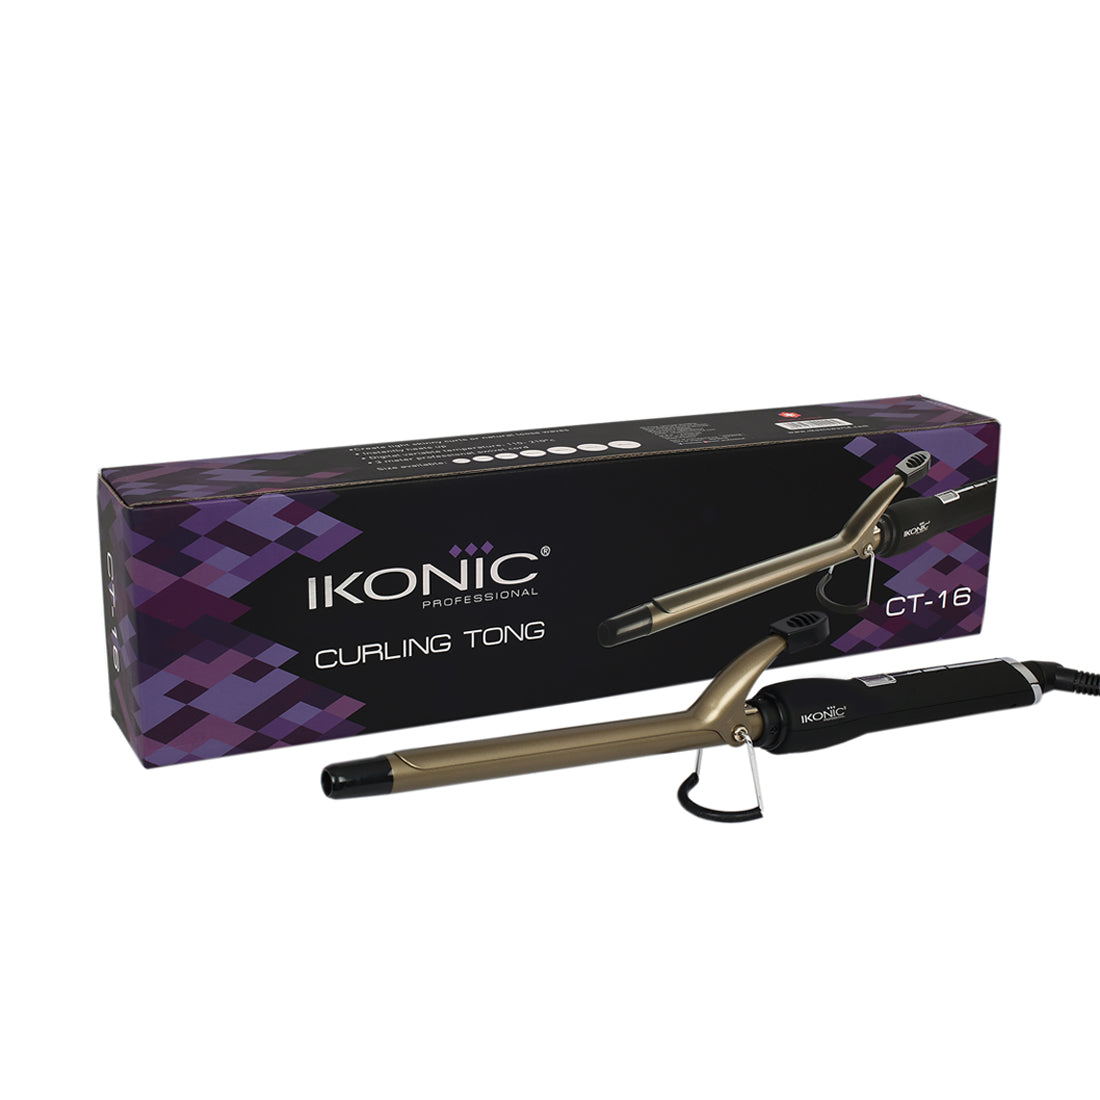 Ikonic Professional Curling Tong 16mm CT-16 - Niram